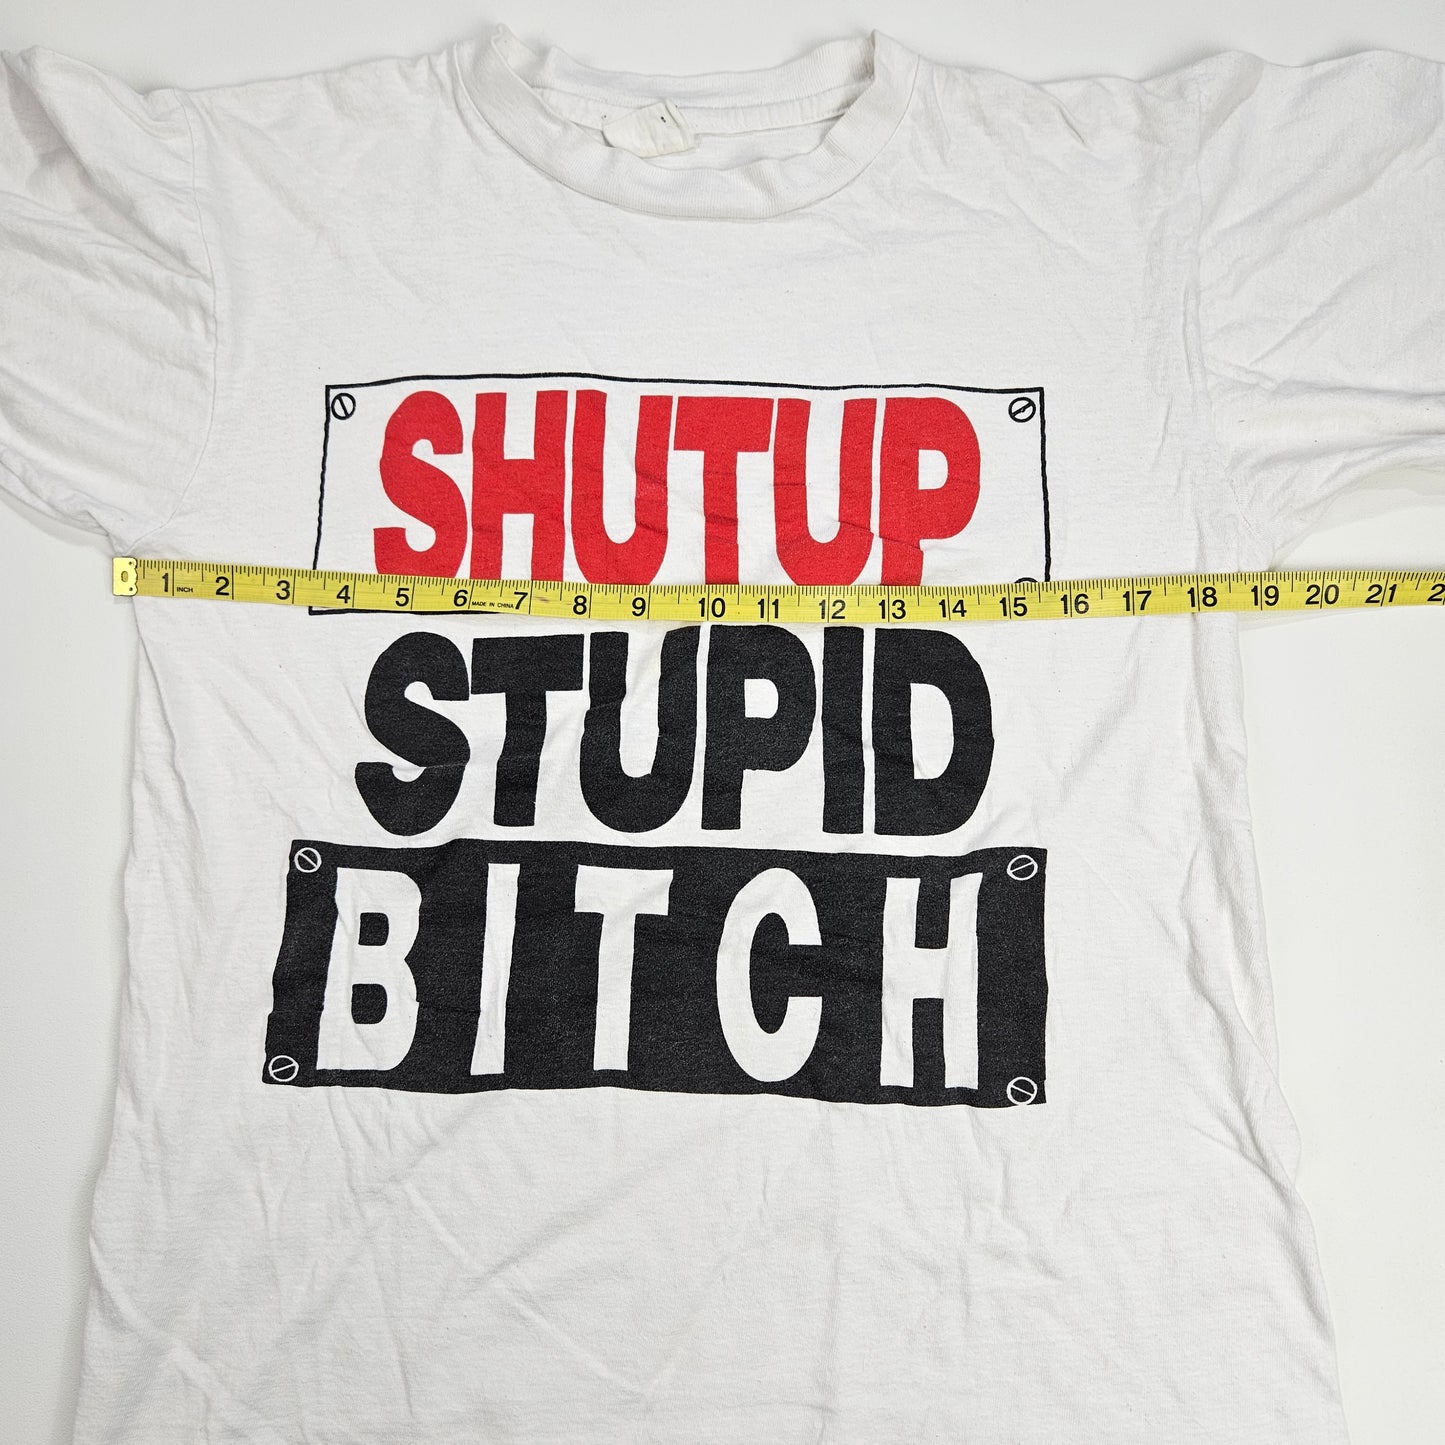 Shut Up Stupid Bitch Shirt 80s / 90s M